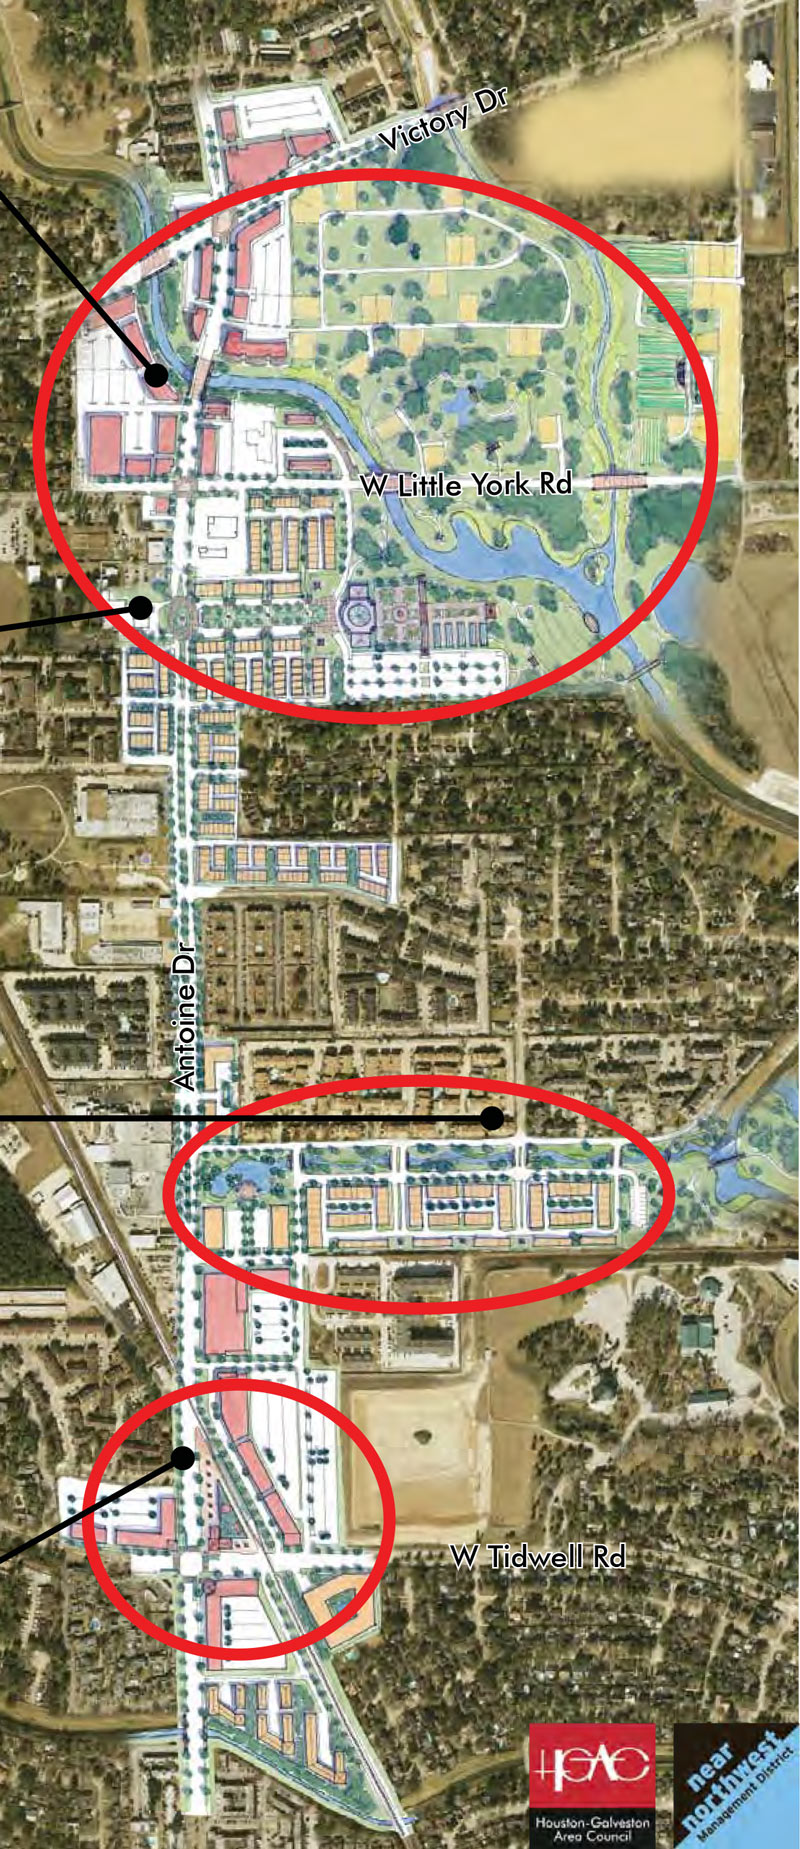 Livable Centers plan, Near Northwest, Houston, 77088